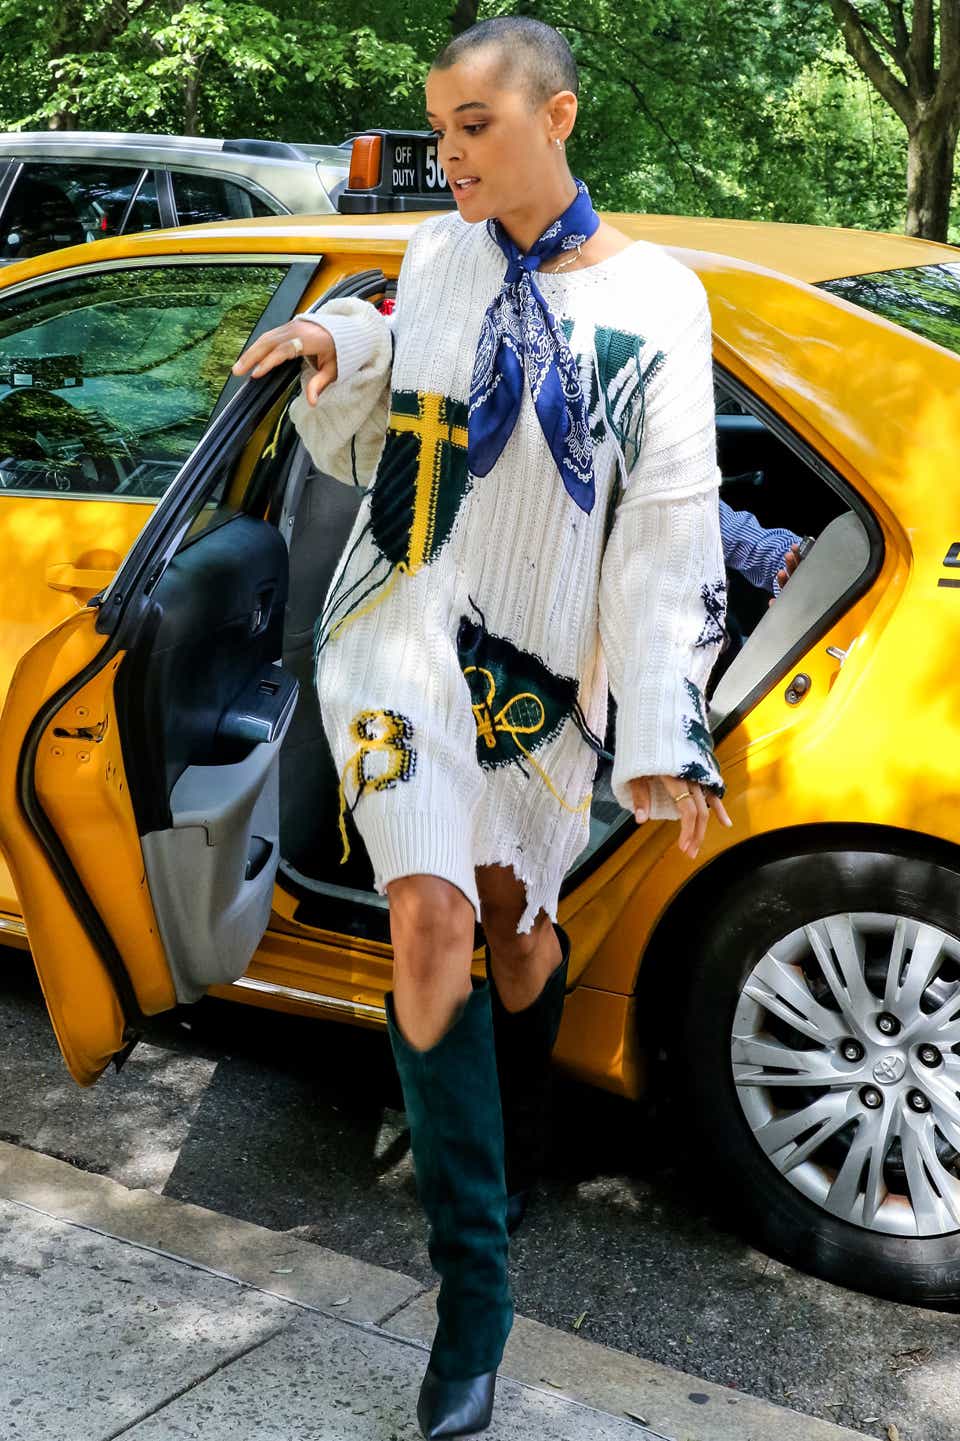 NEW YORK, NY - JUNE 08: Jordan Alexander is seen at the film set of 'Gossip Girl' TV Series on June 08, 2021 in New York City.